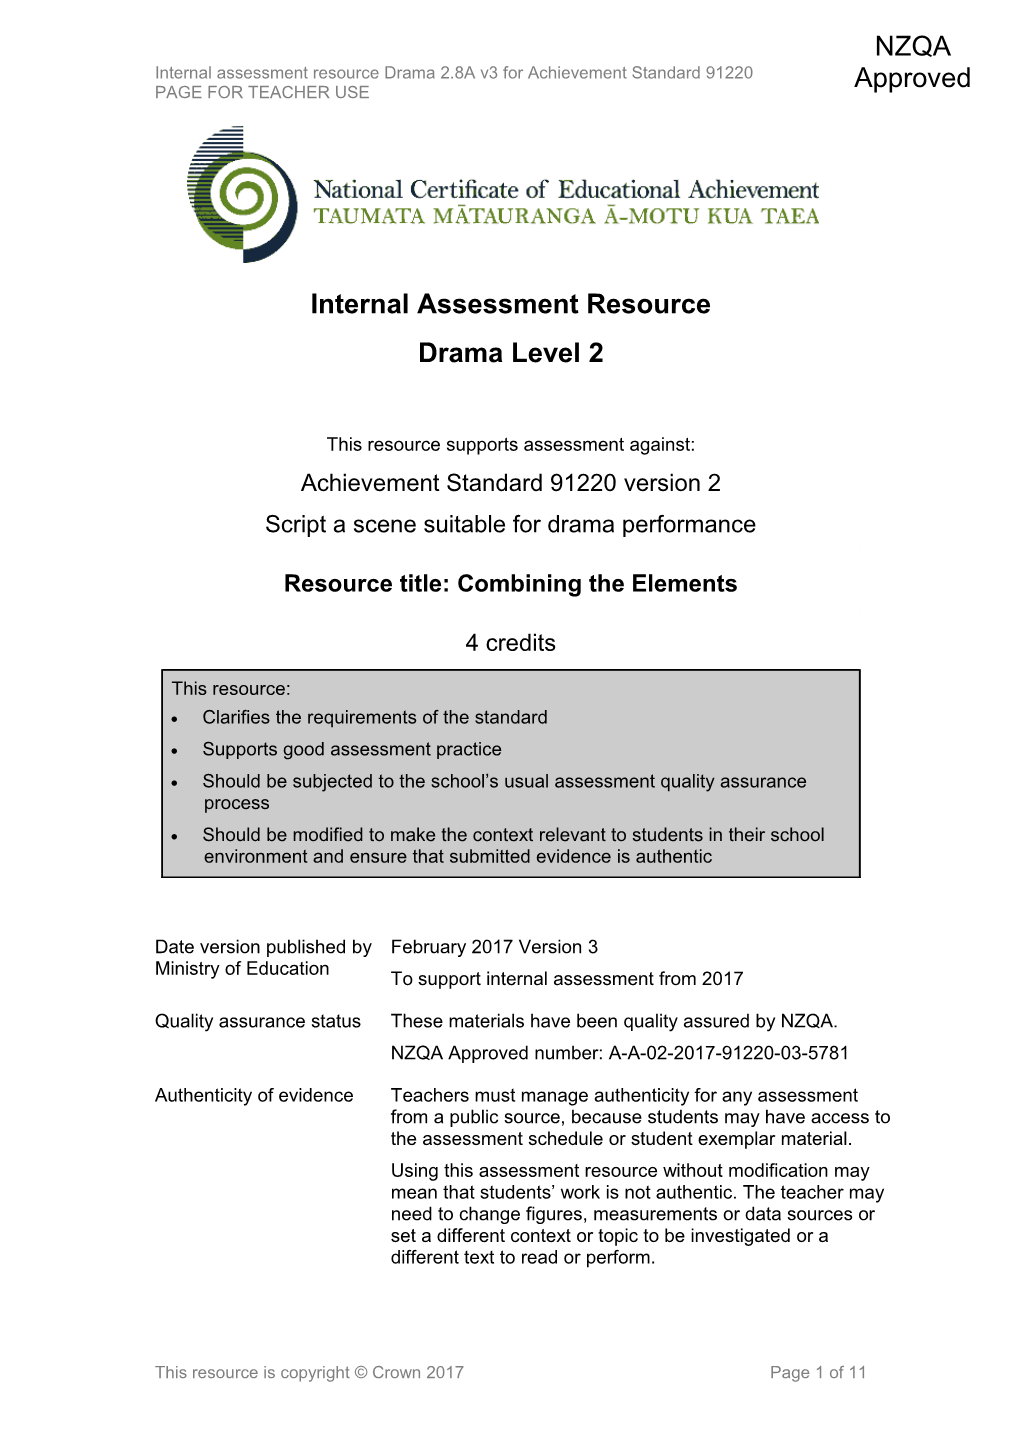 Level 2 Drama Internal Assessment Resource